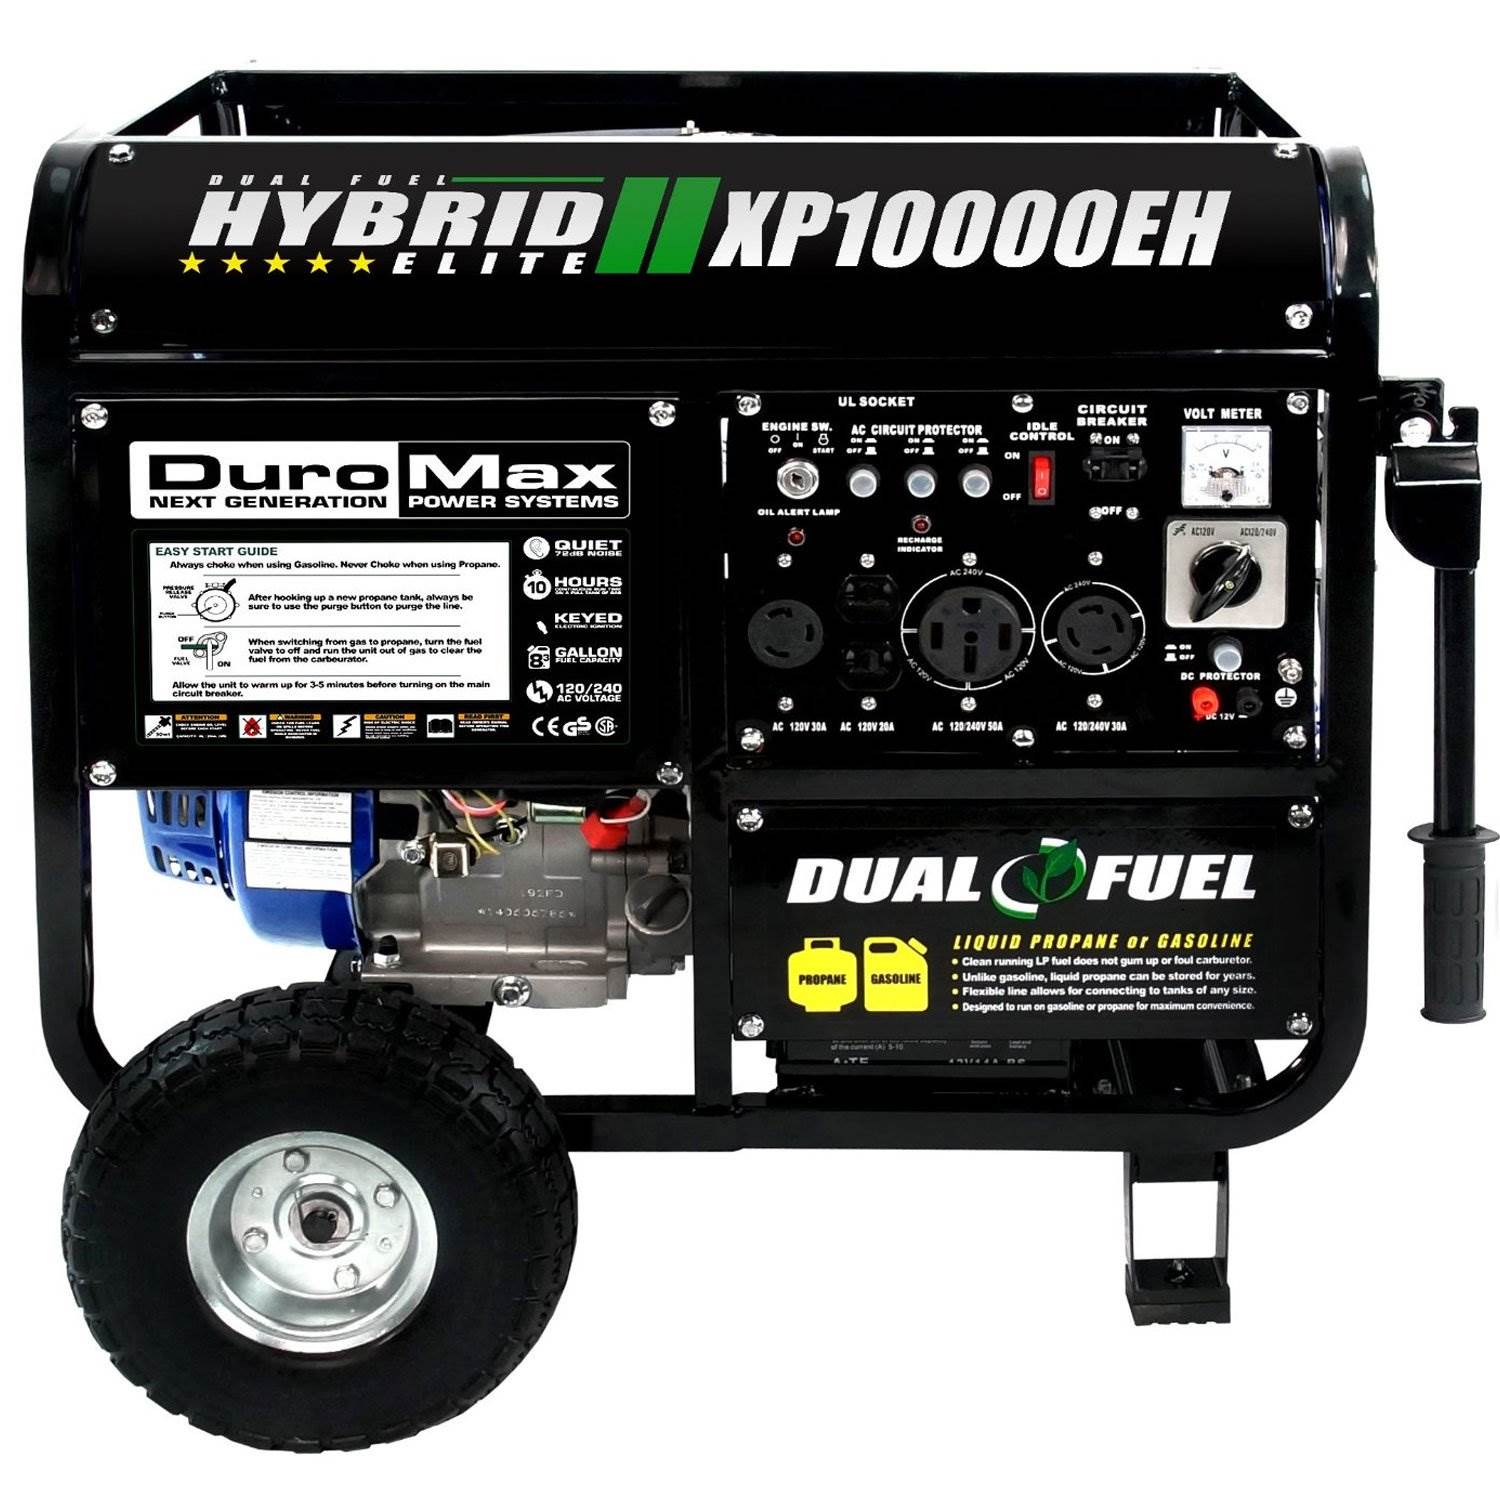 DuroMax XP10000EH 10,000 Watt Portable Dual Fuel Gas Propane Generator - image 5 of 9